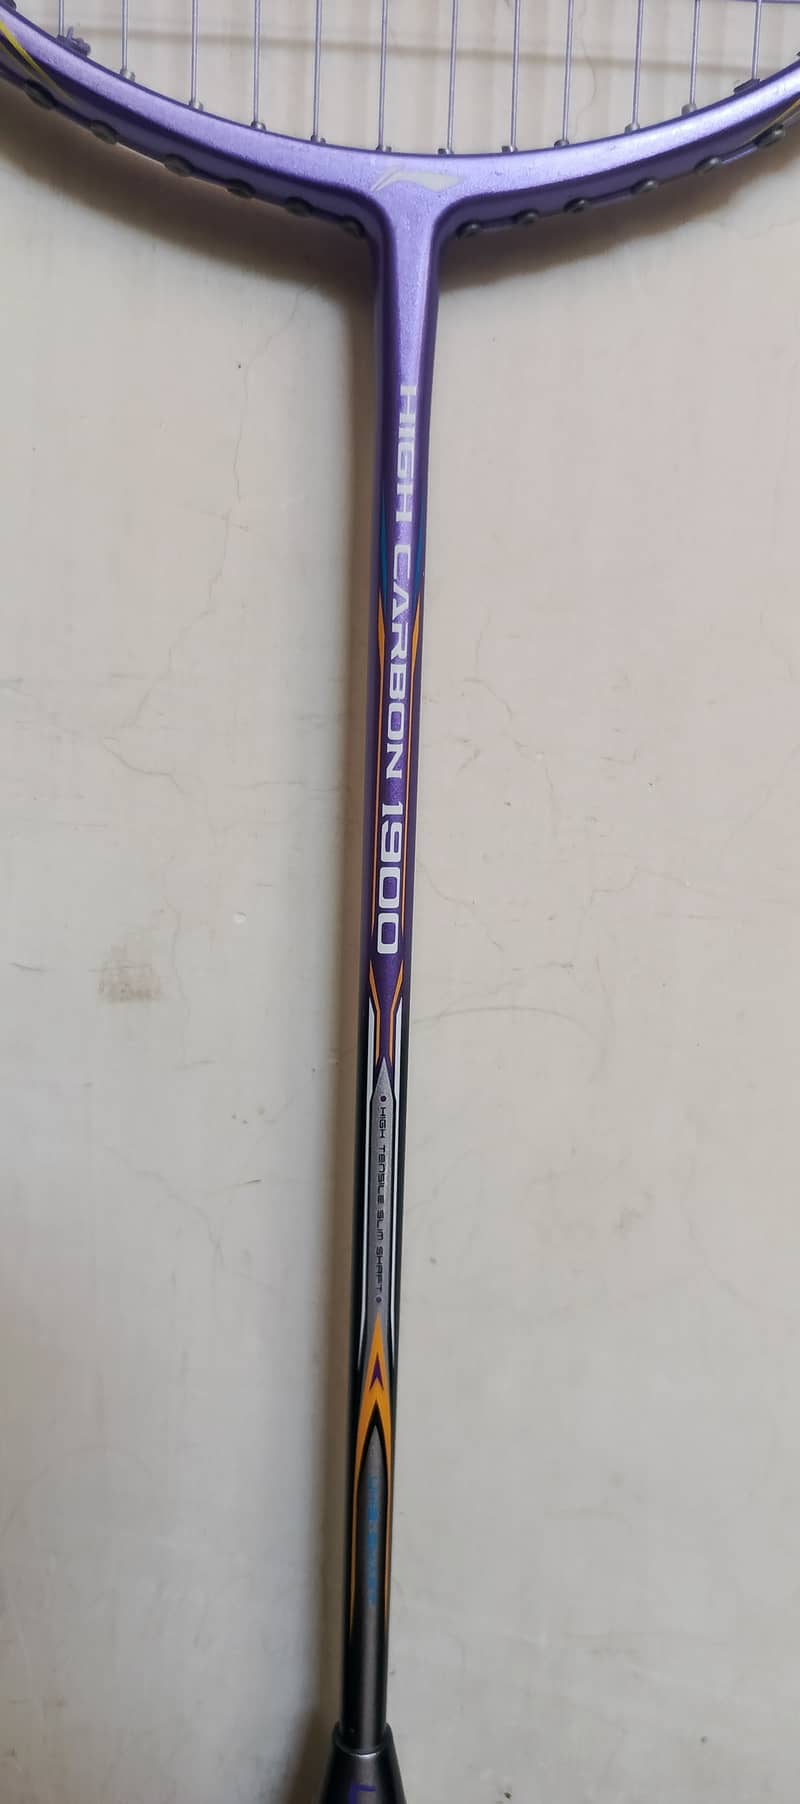 LI-NING HC 1900 Purple | Badminton Racket | Carbon Frame racket 8